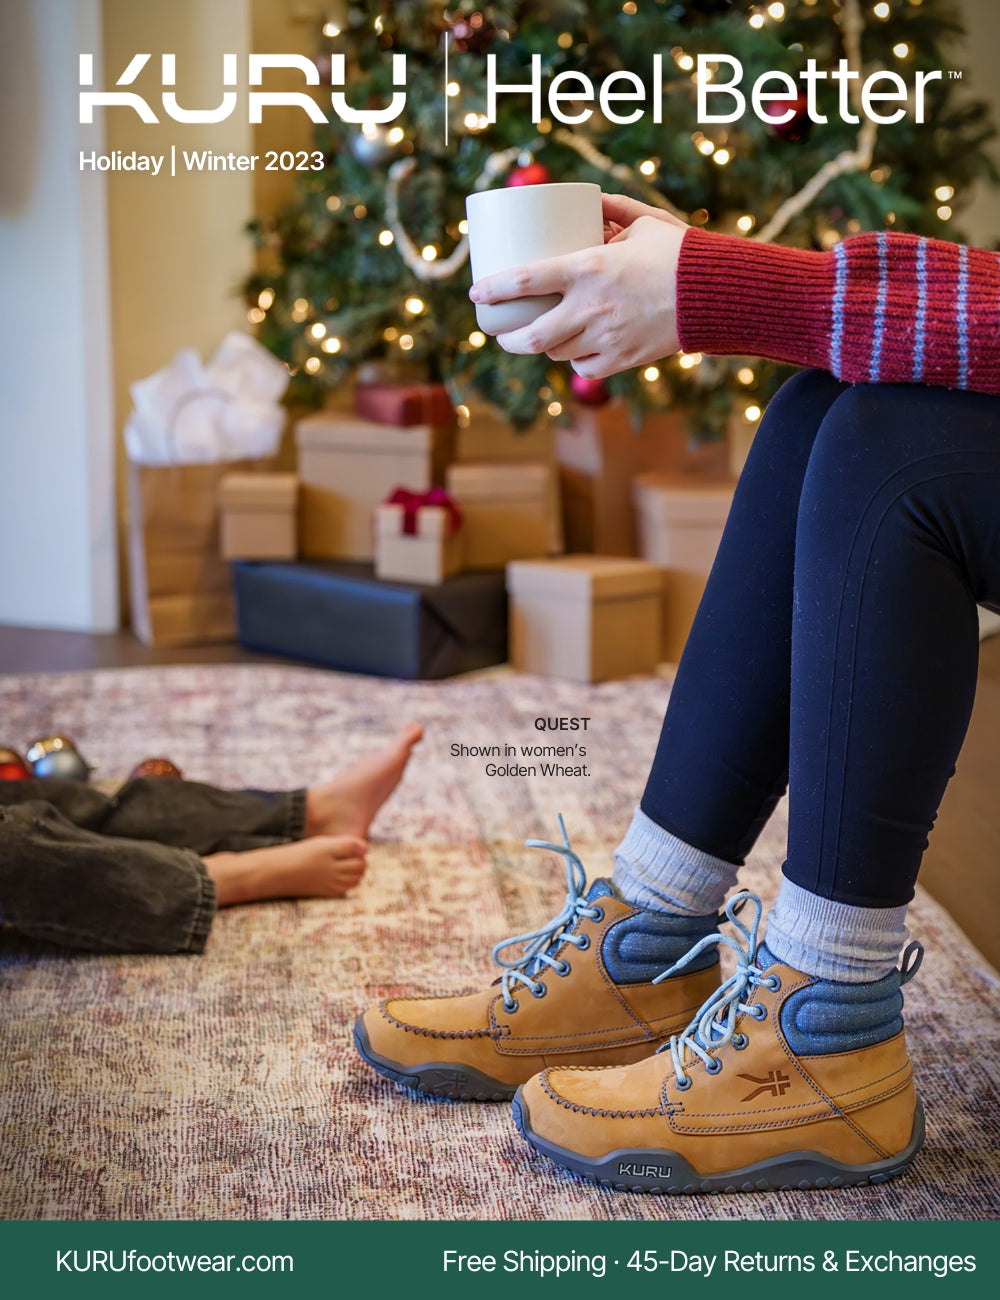 KURU Footwear December Holiday 2023 Catalog